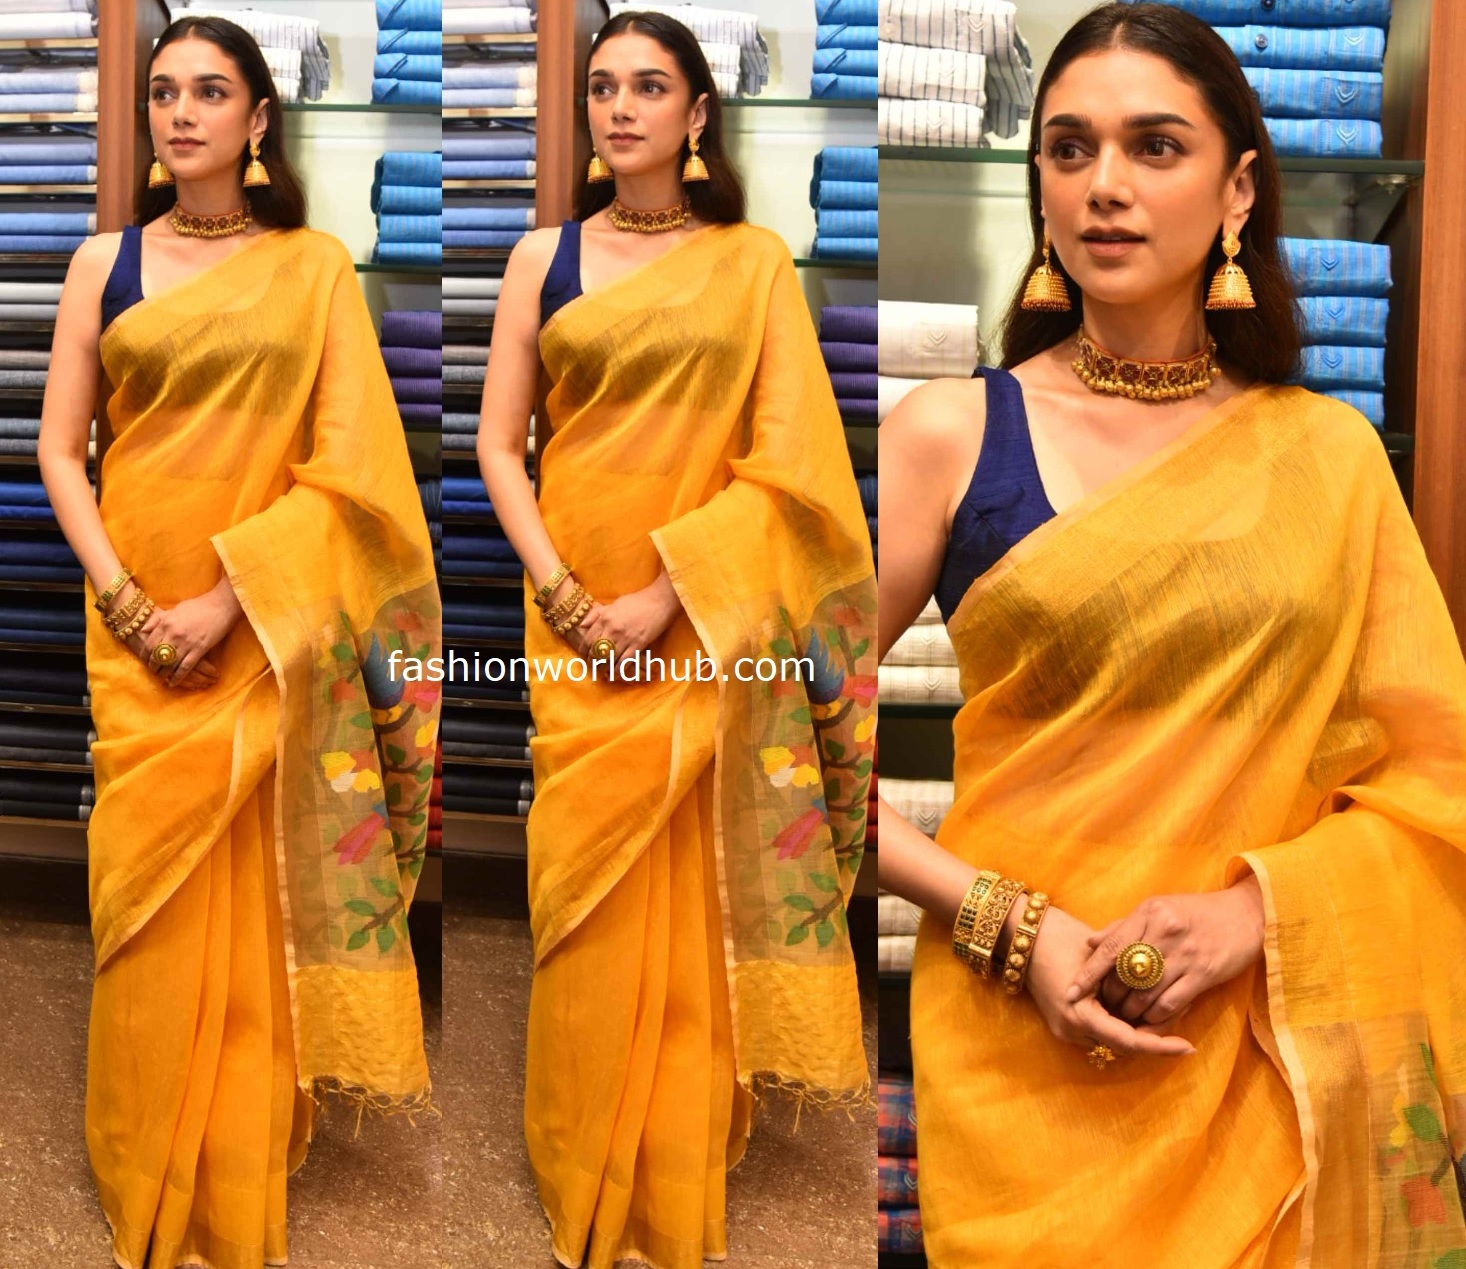 Aditi Rao Hydari Traditional look! | Fashionworldhub